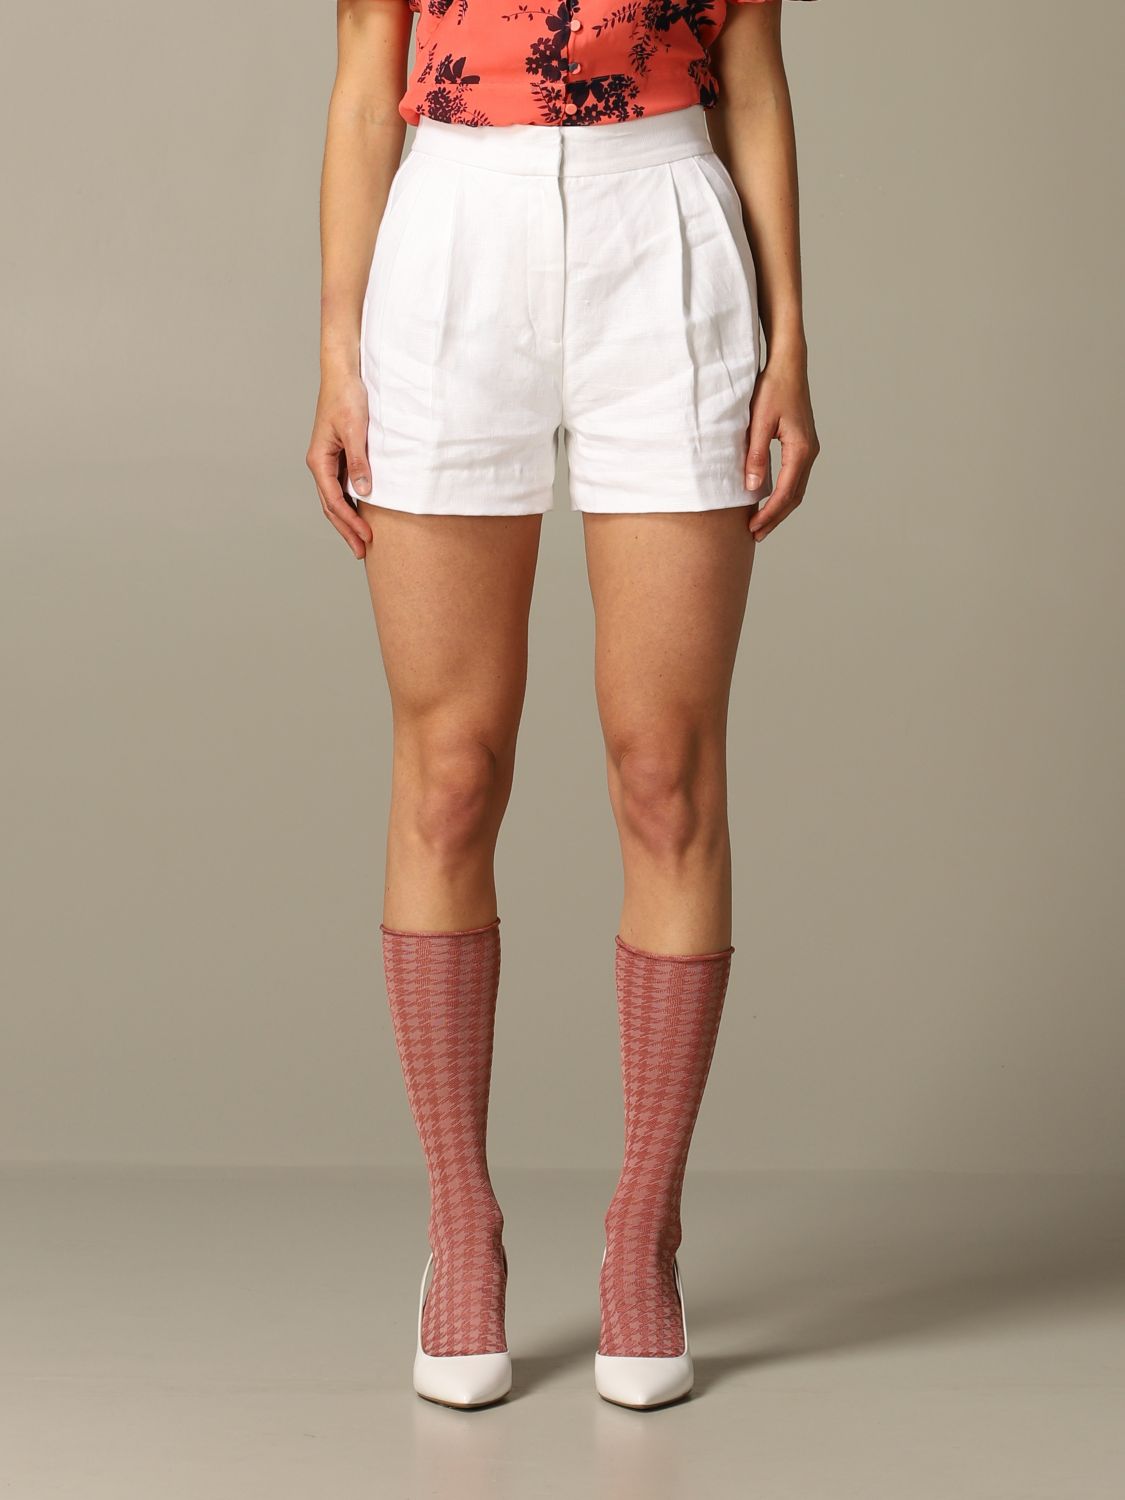 michael kors shorts womens